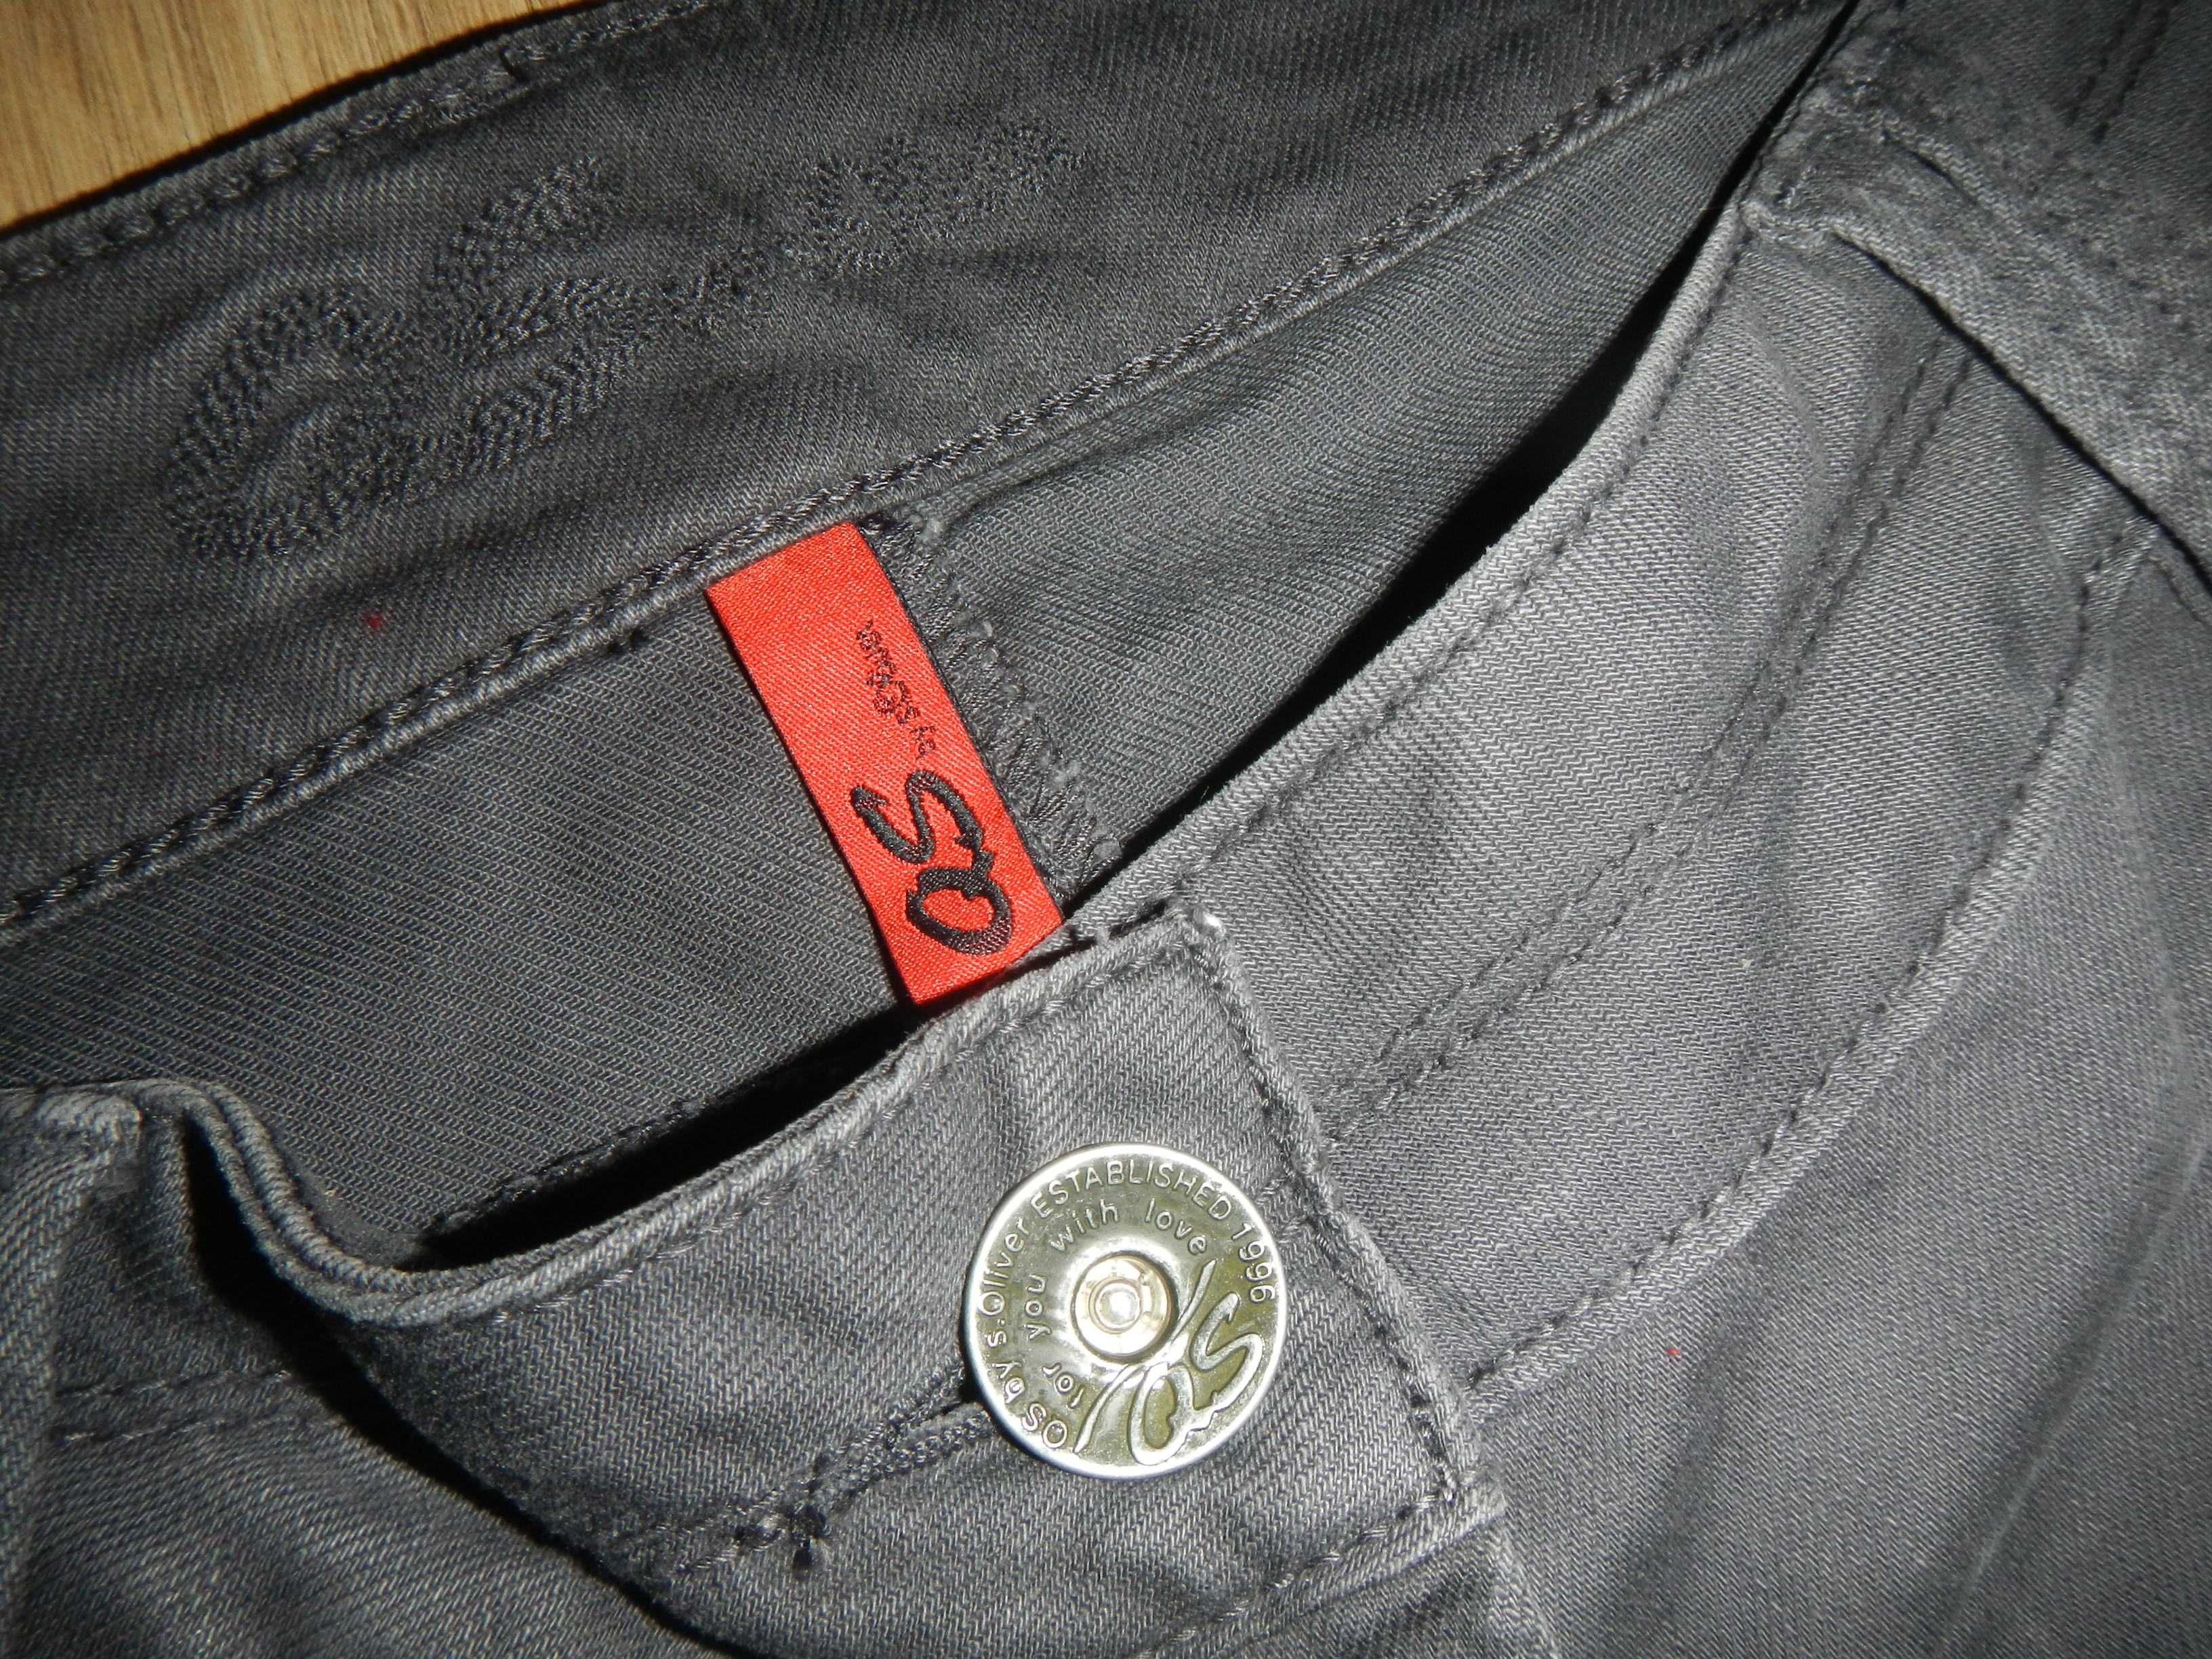 Spodniczka L mini khaki QS by s.Oliver